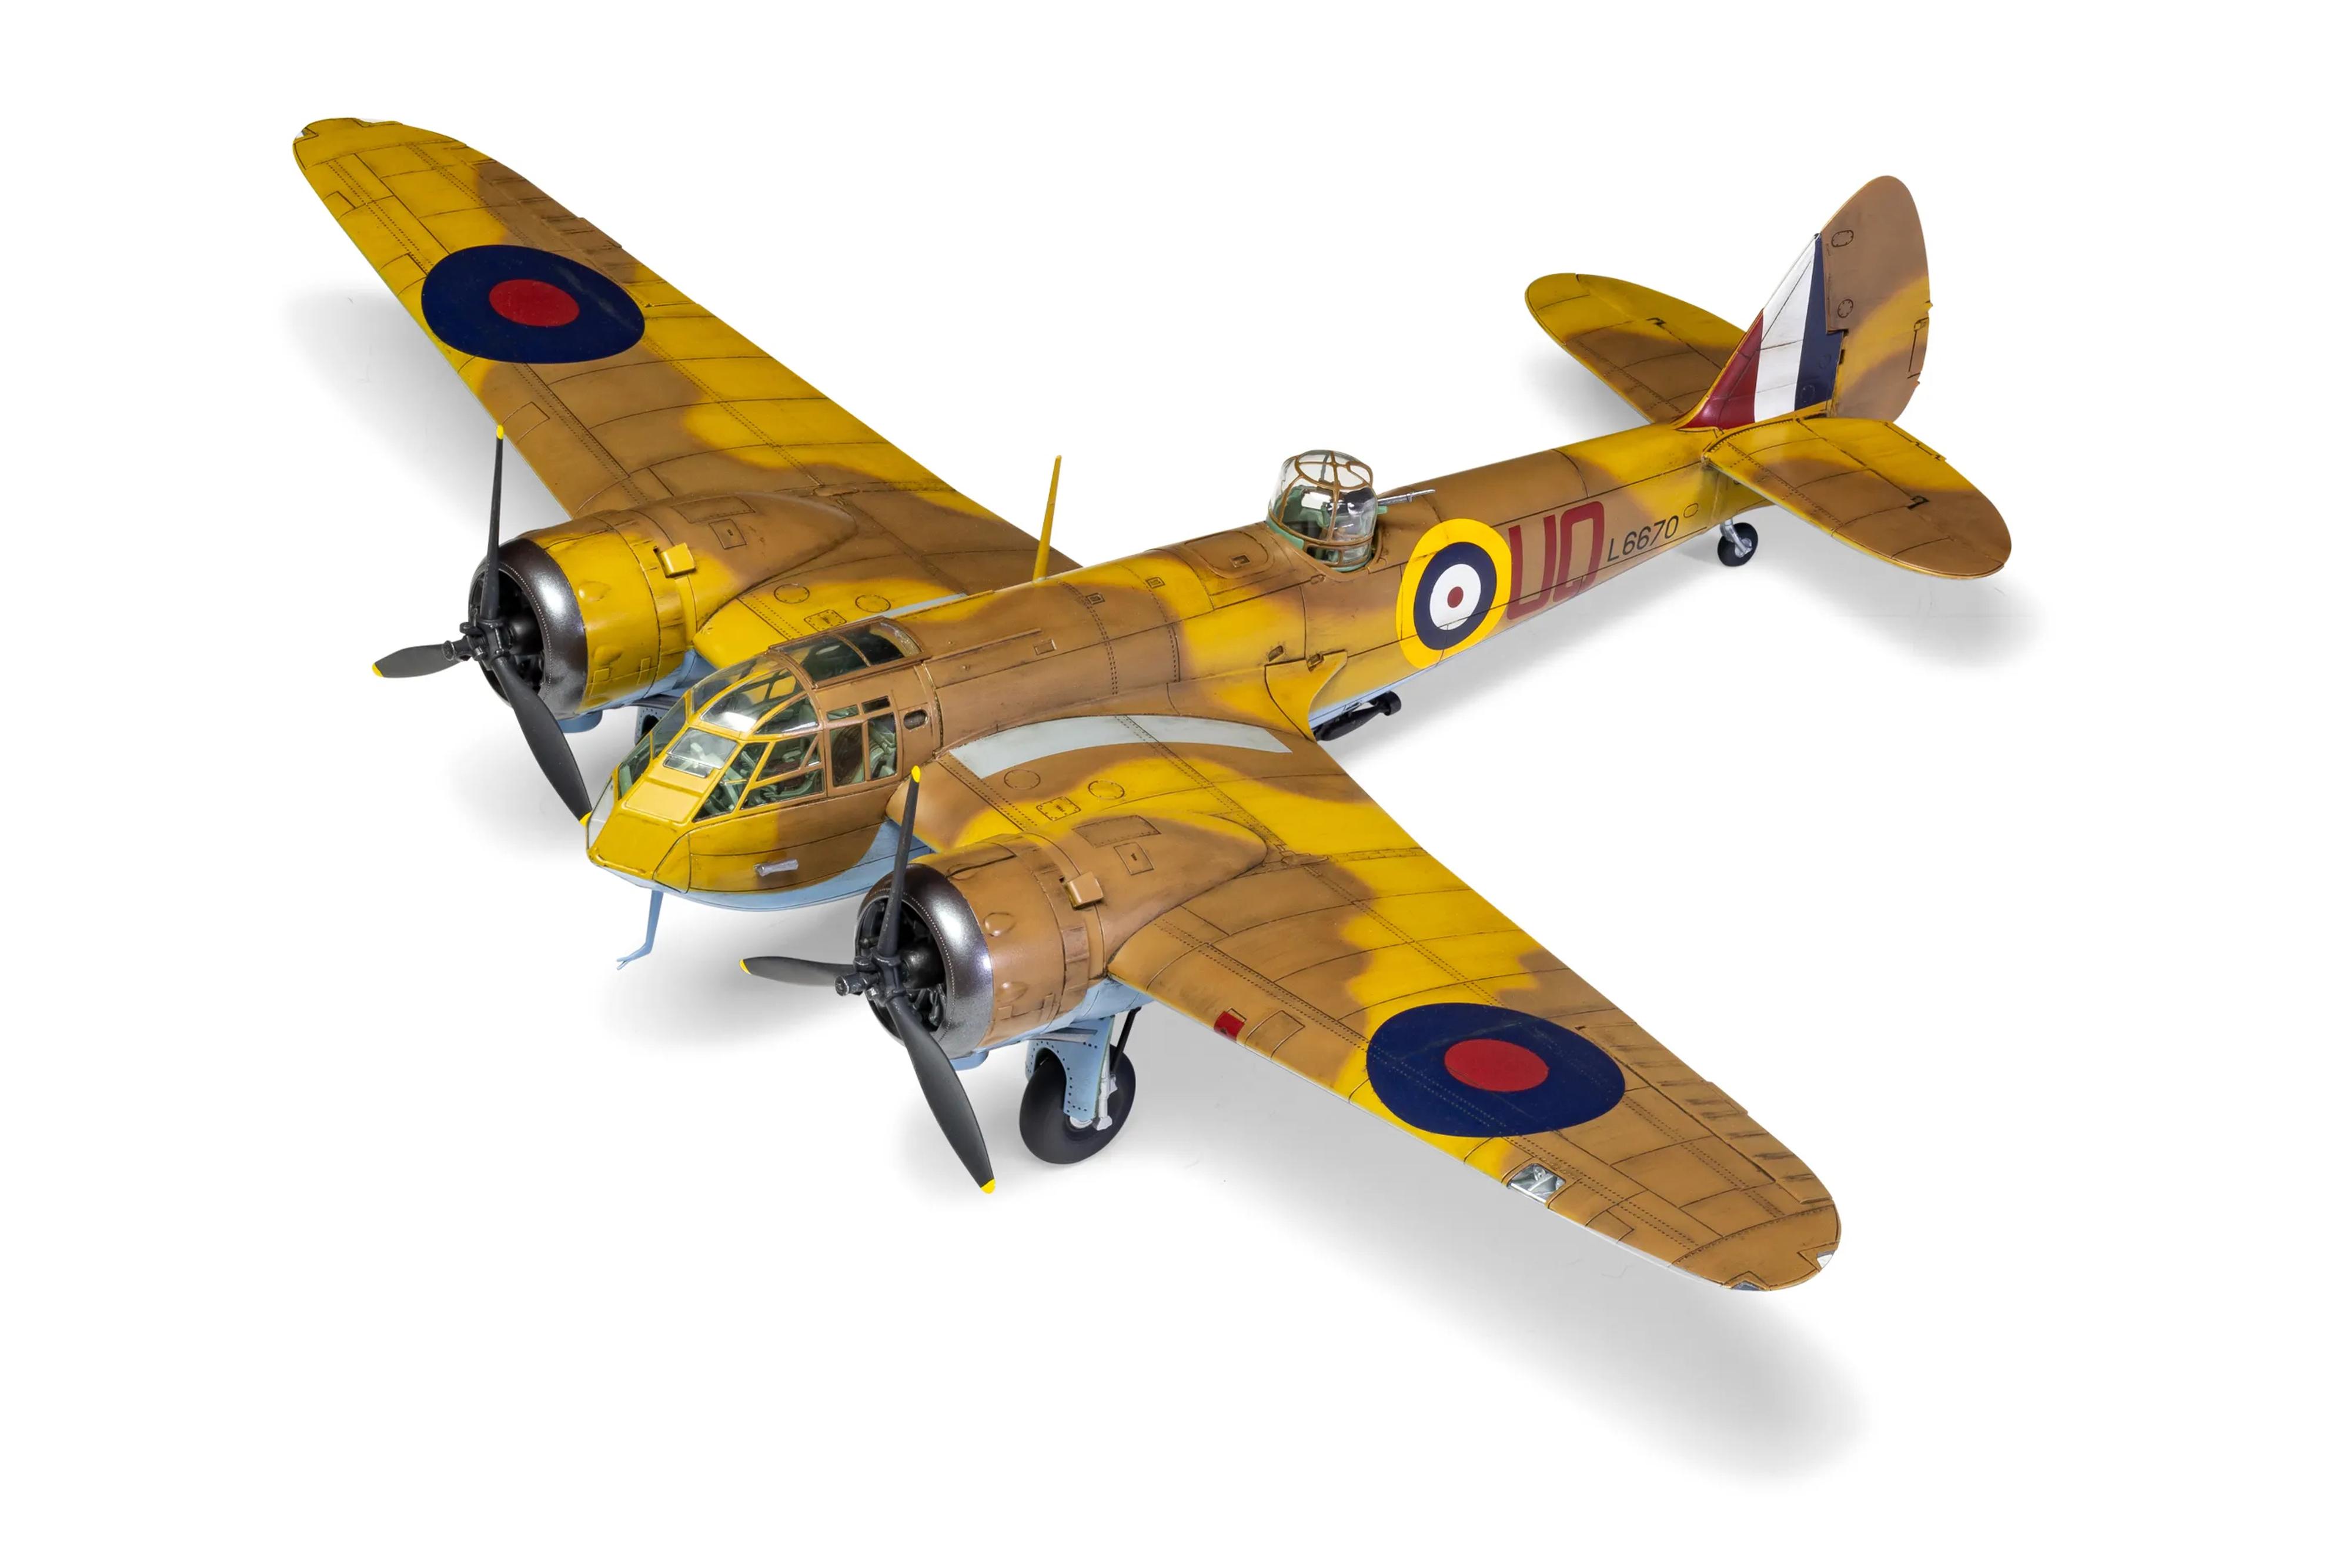 Airfix 1/48 Bristol Blenheim Mk.1 Model Kit